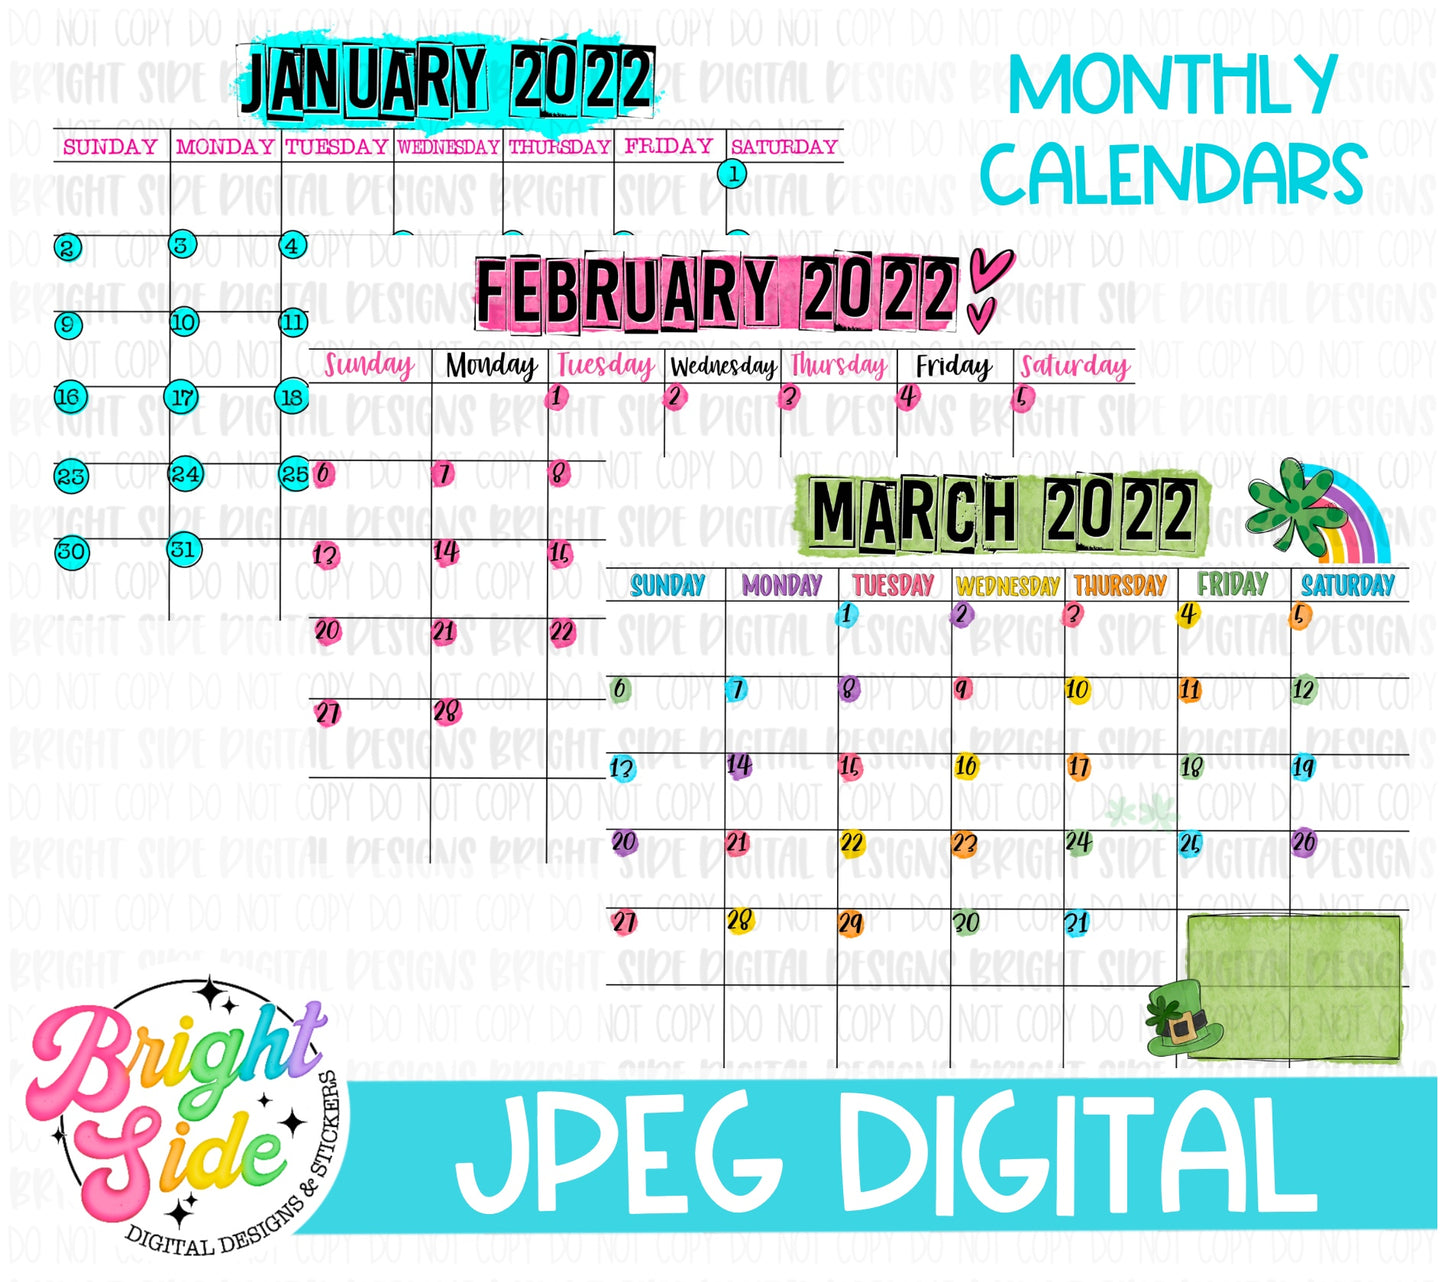 2022 Monthly Calendars